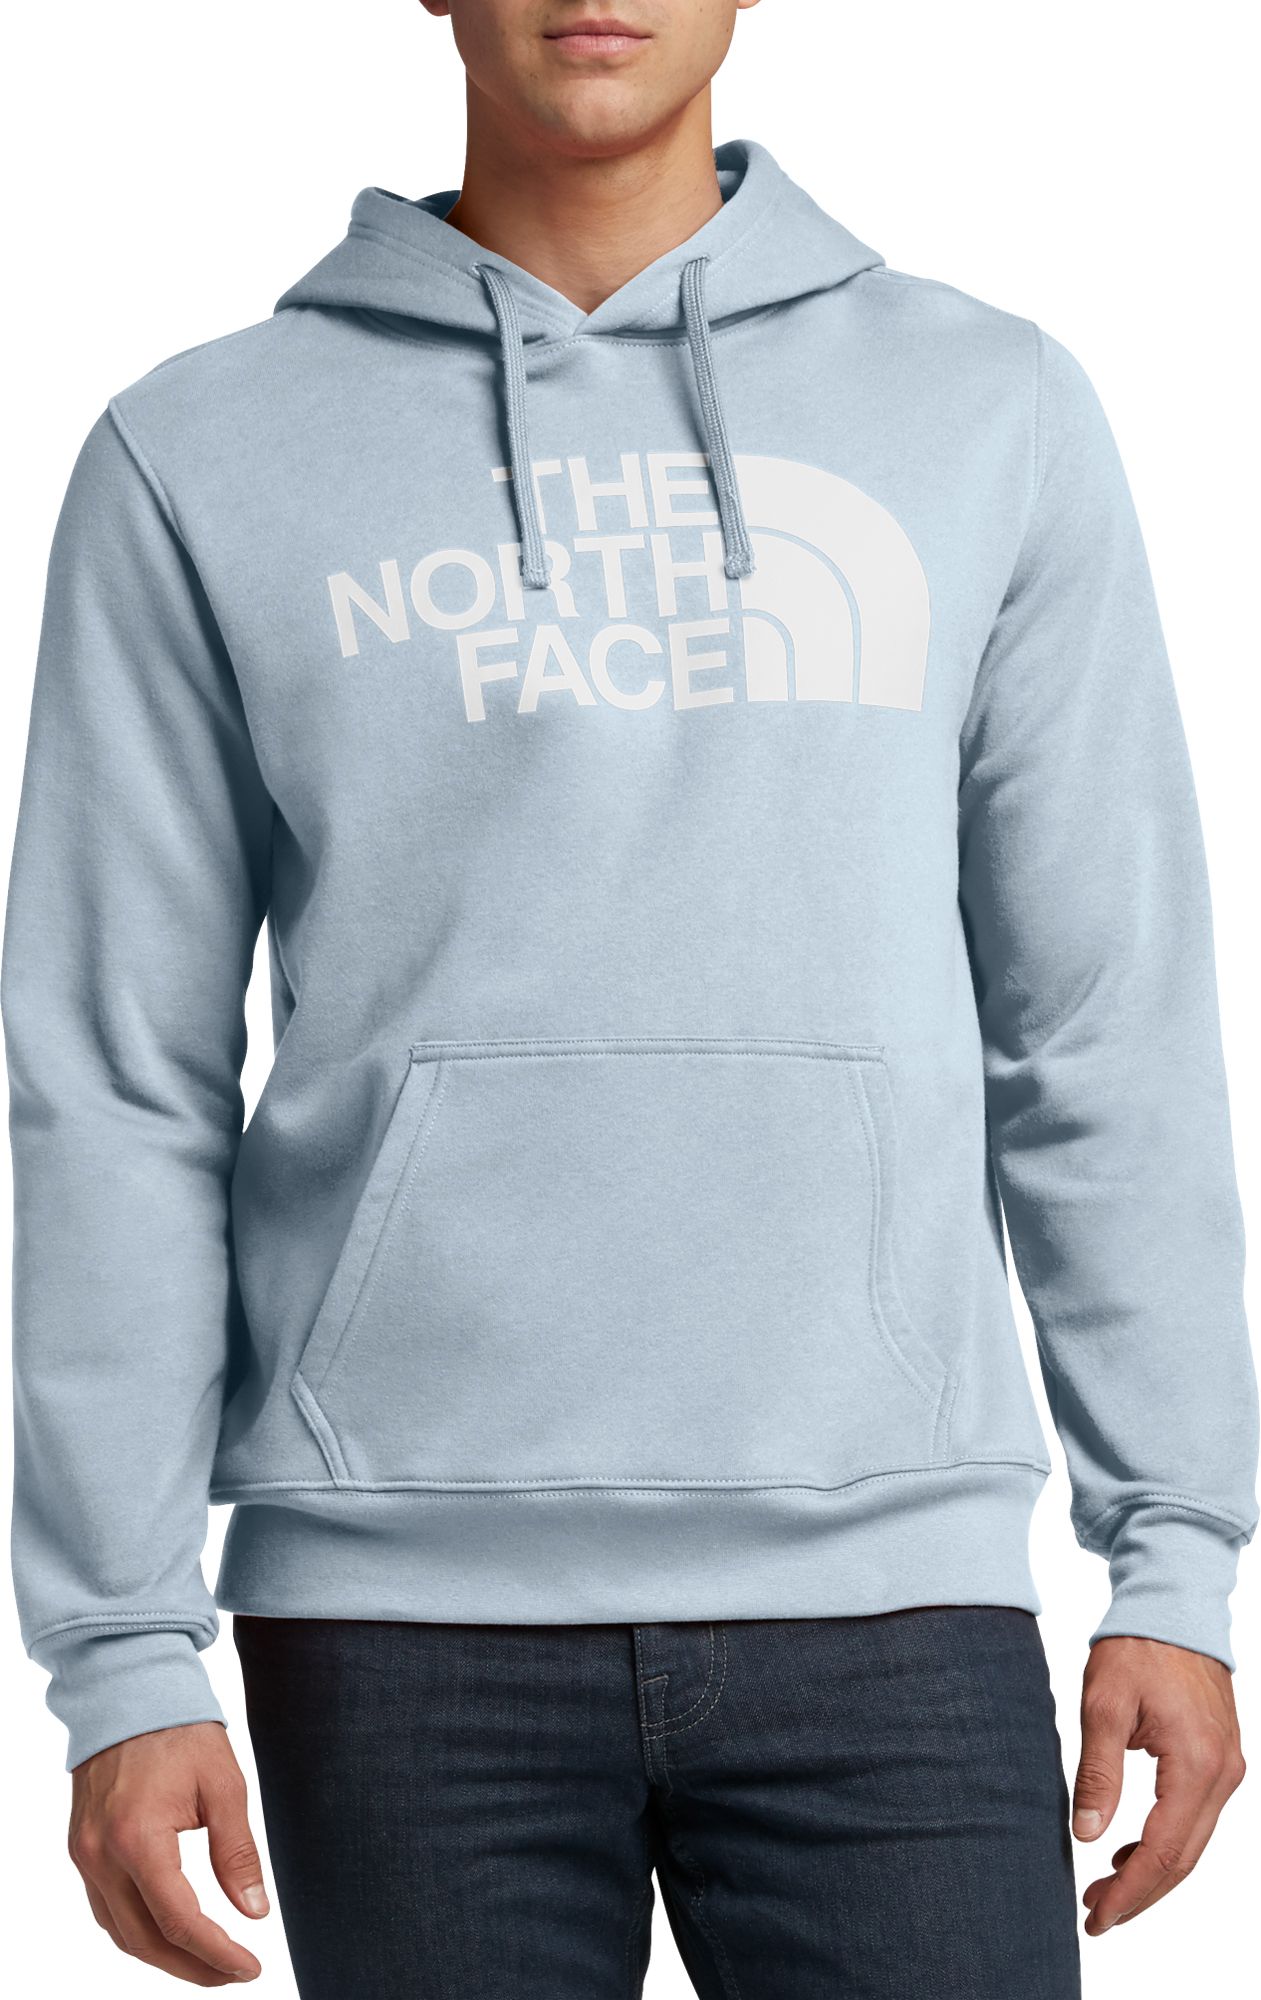 north face sweatshirt dicks